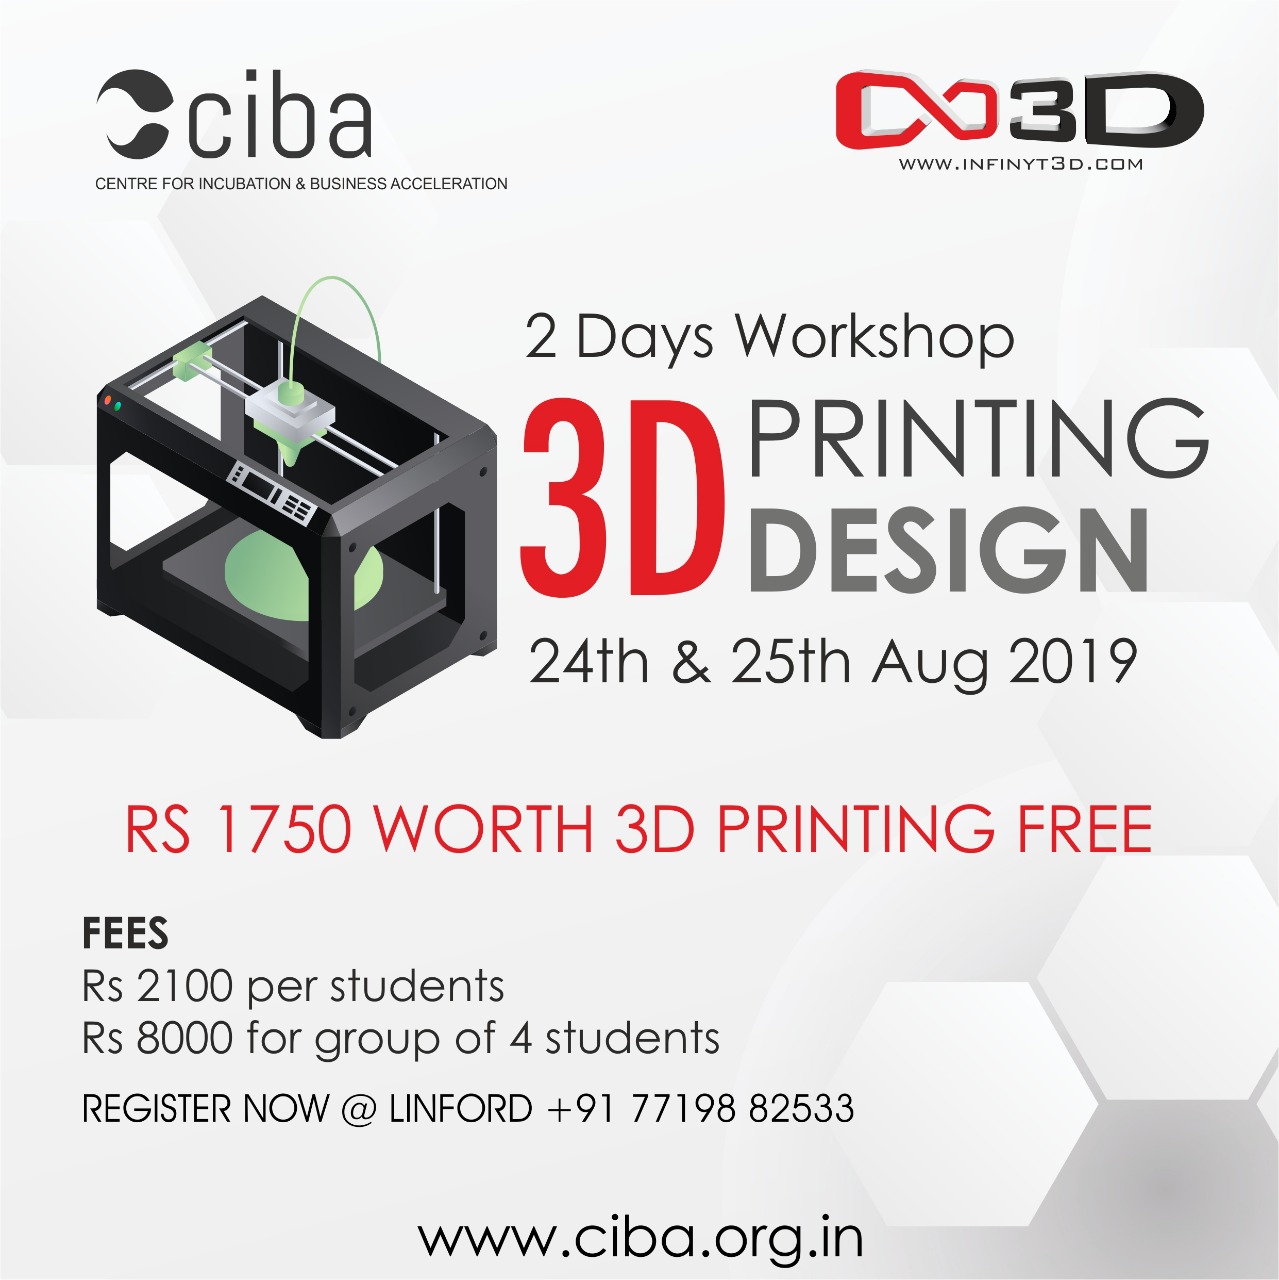 ciba-3D Printing Design